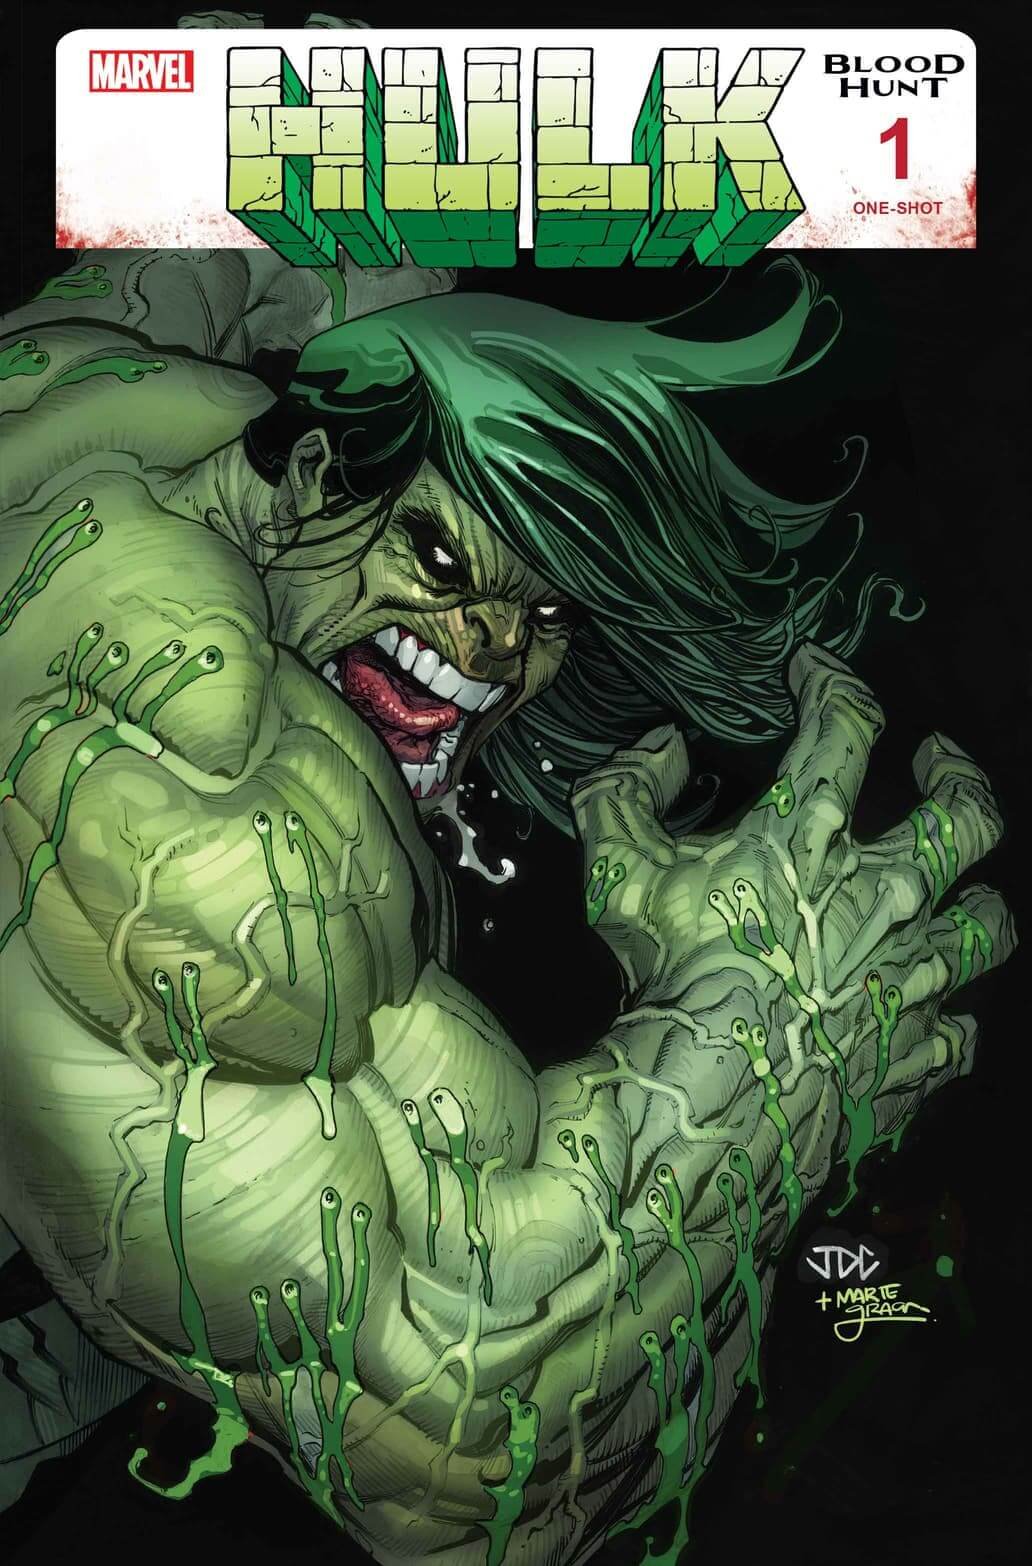 Couverture de Hulk : Blood Hunt par Joshua Cassara